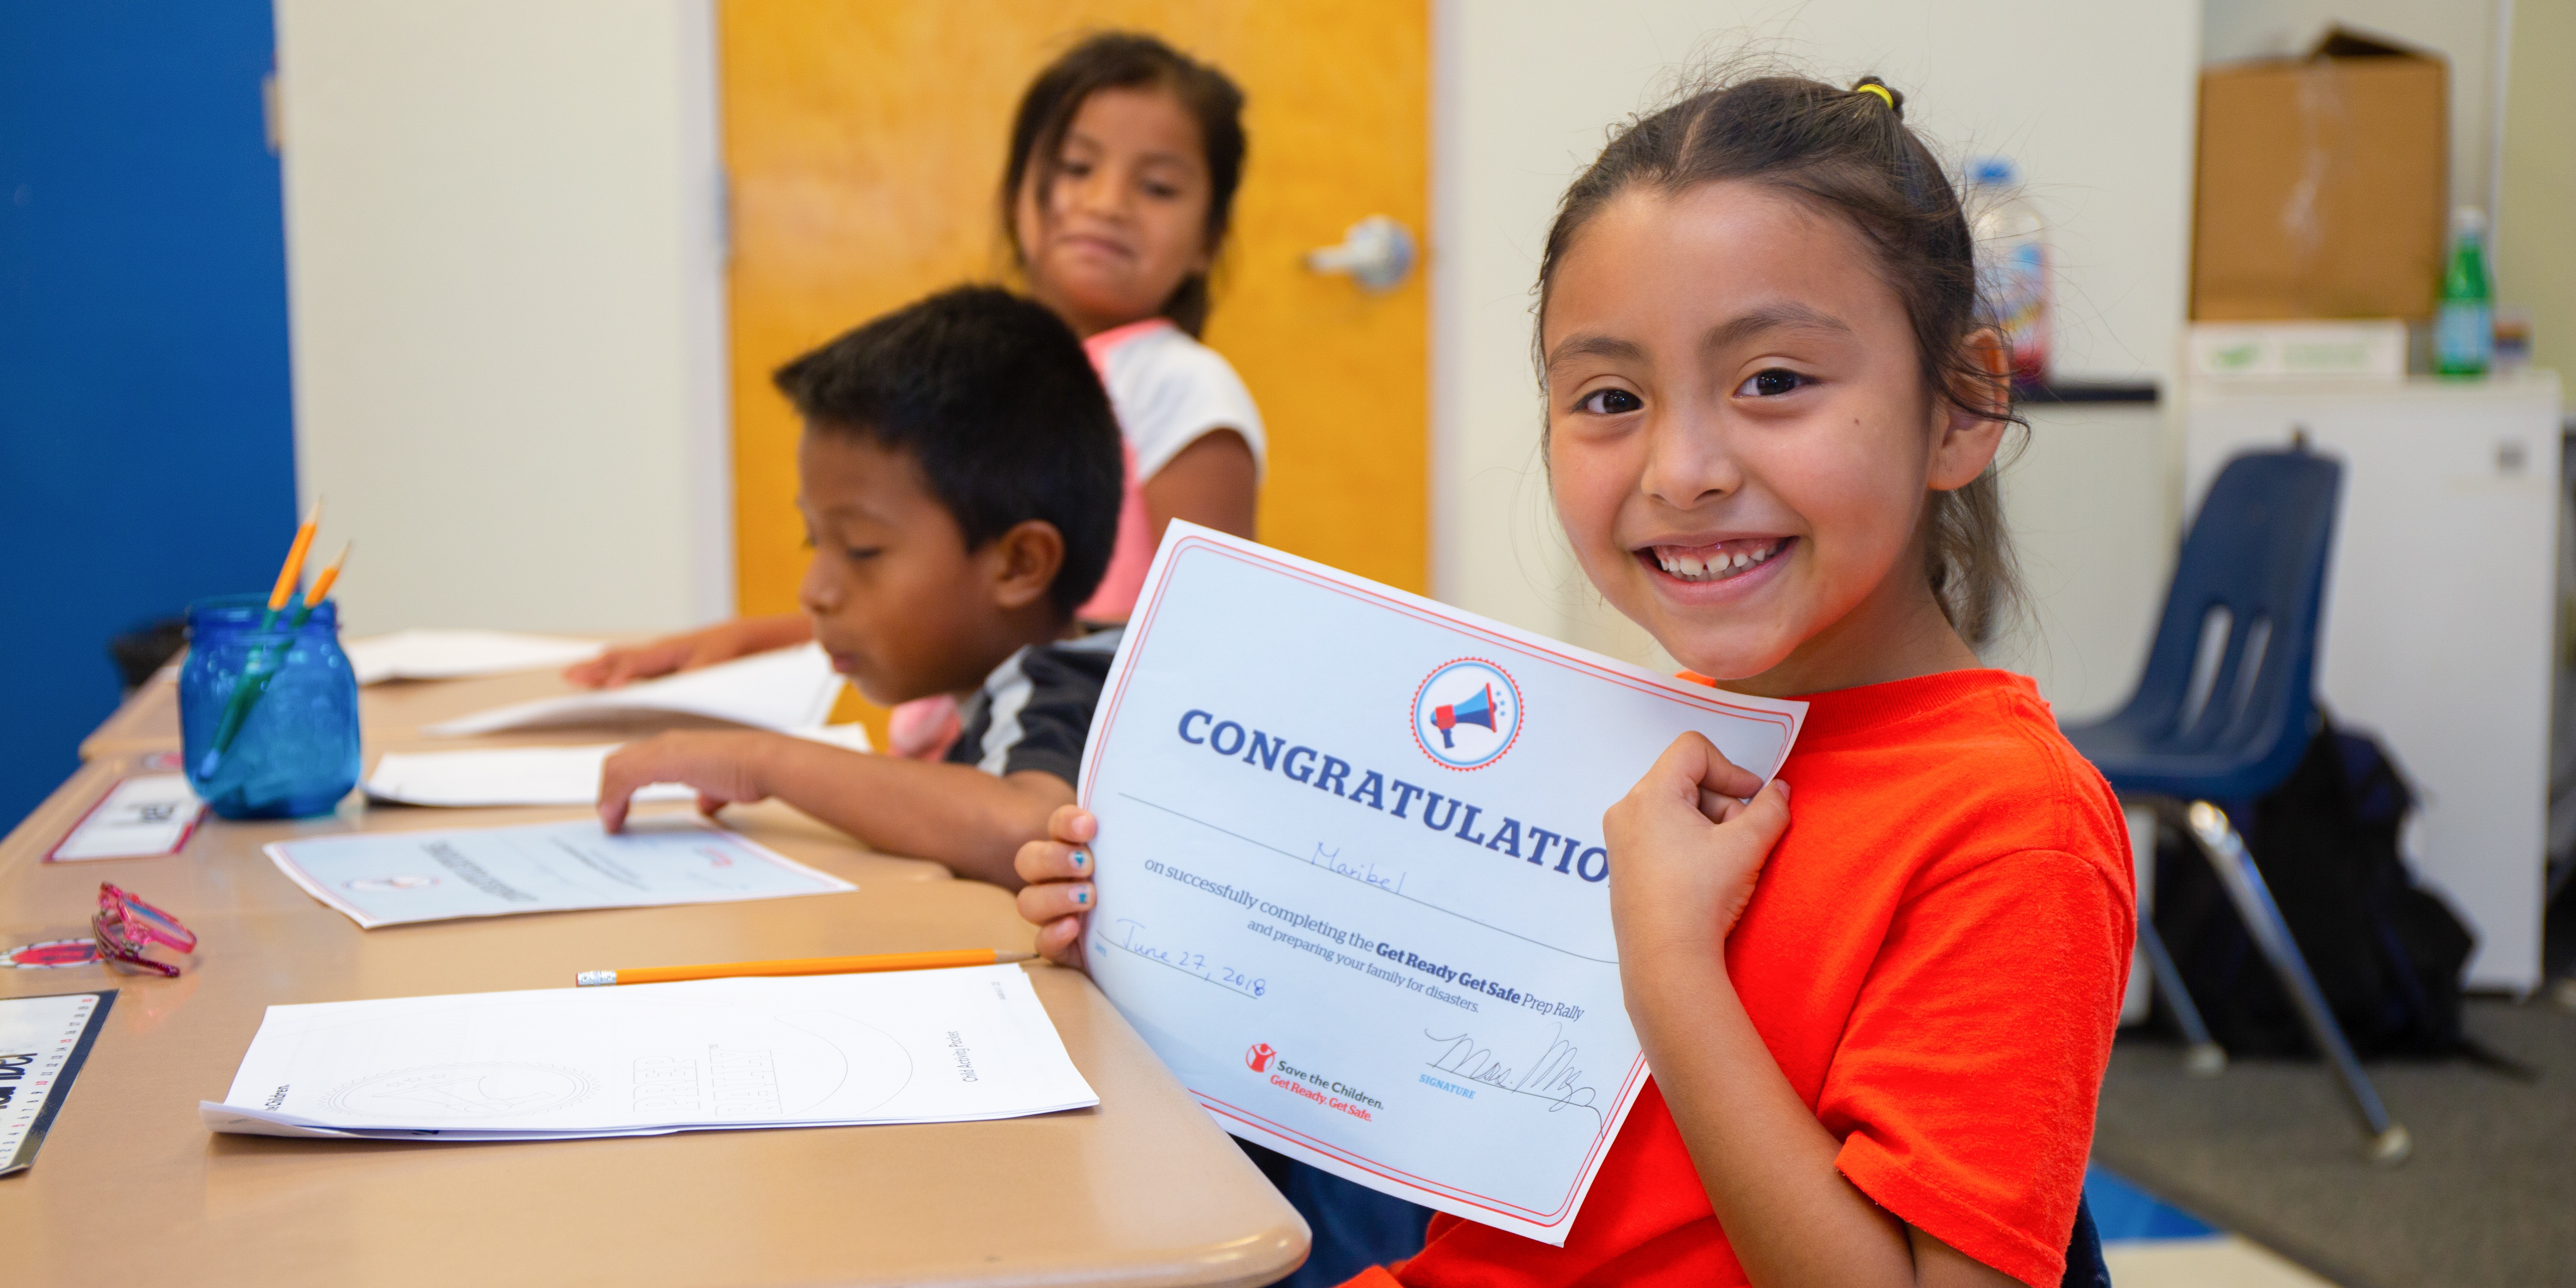 USA, girl in an orange shirt holds up a "congratulations certificate" 